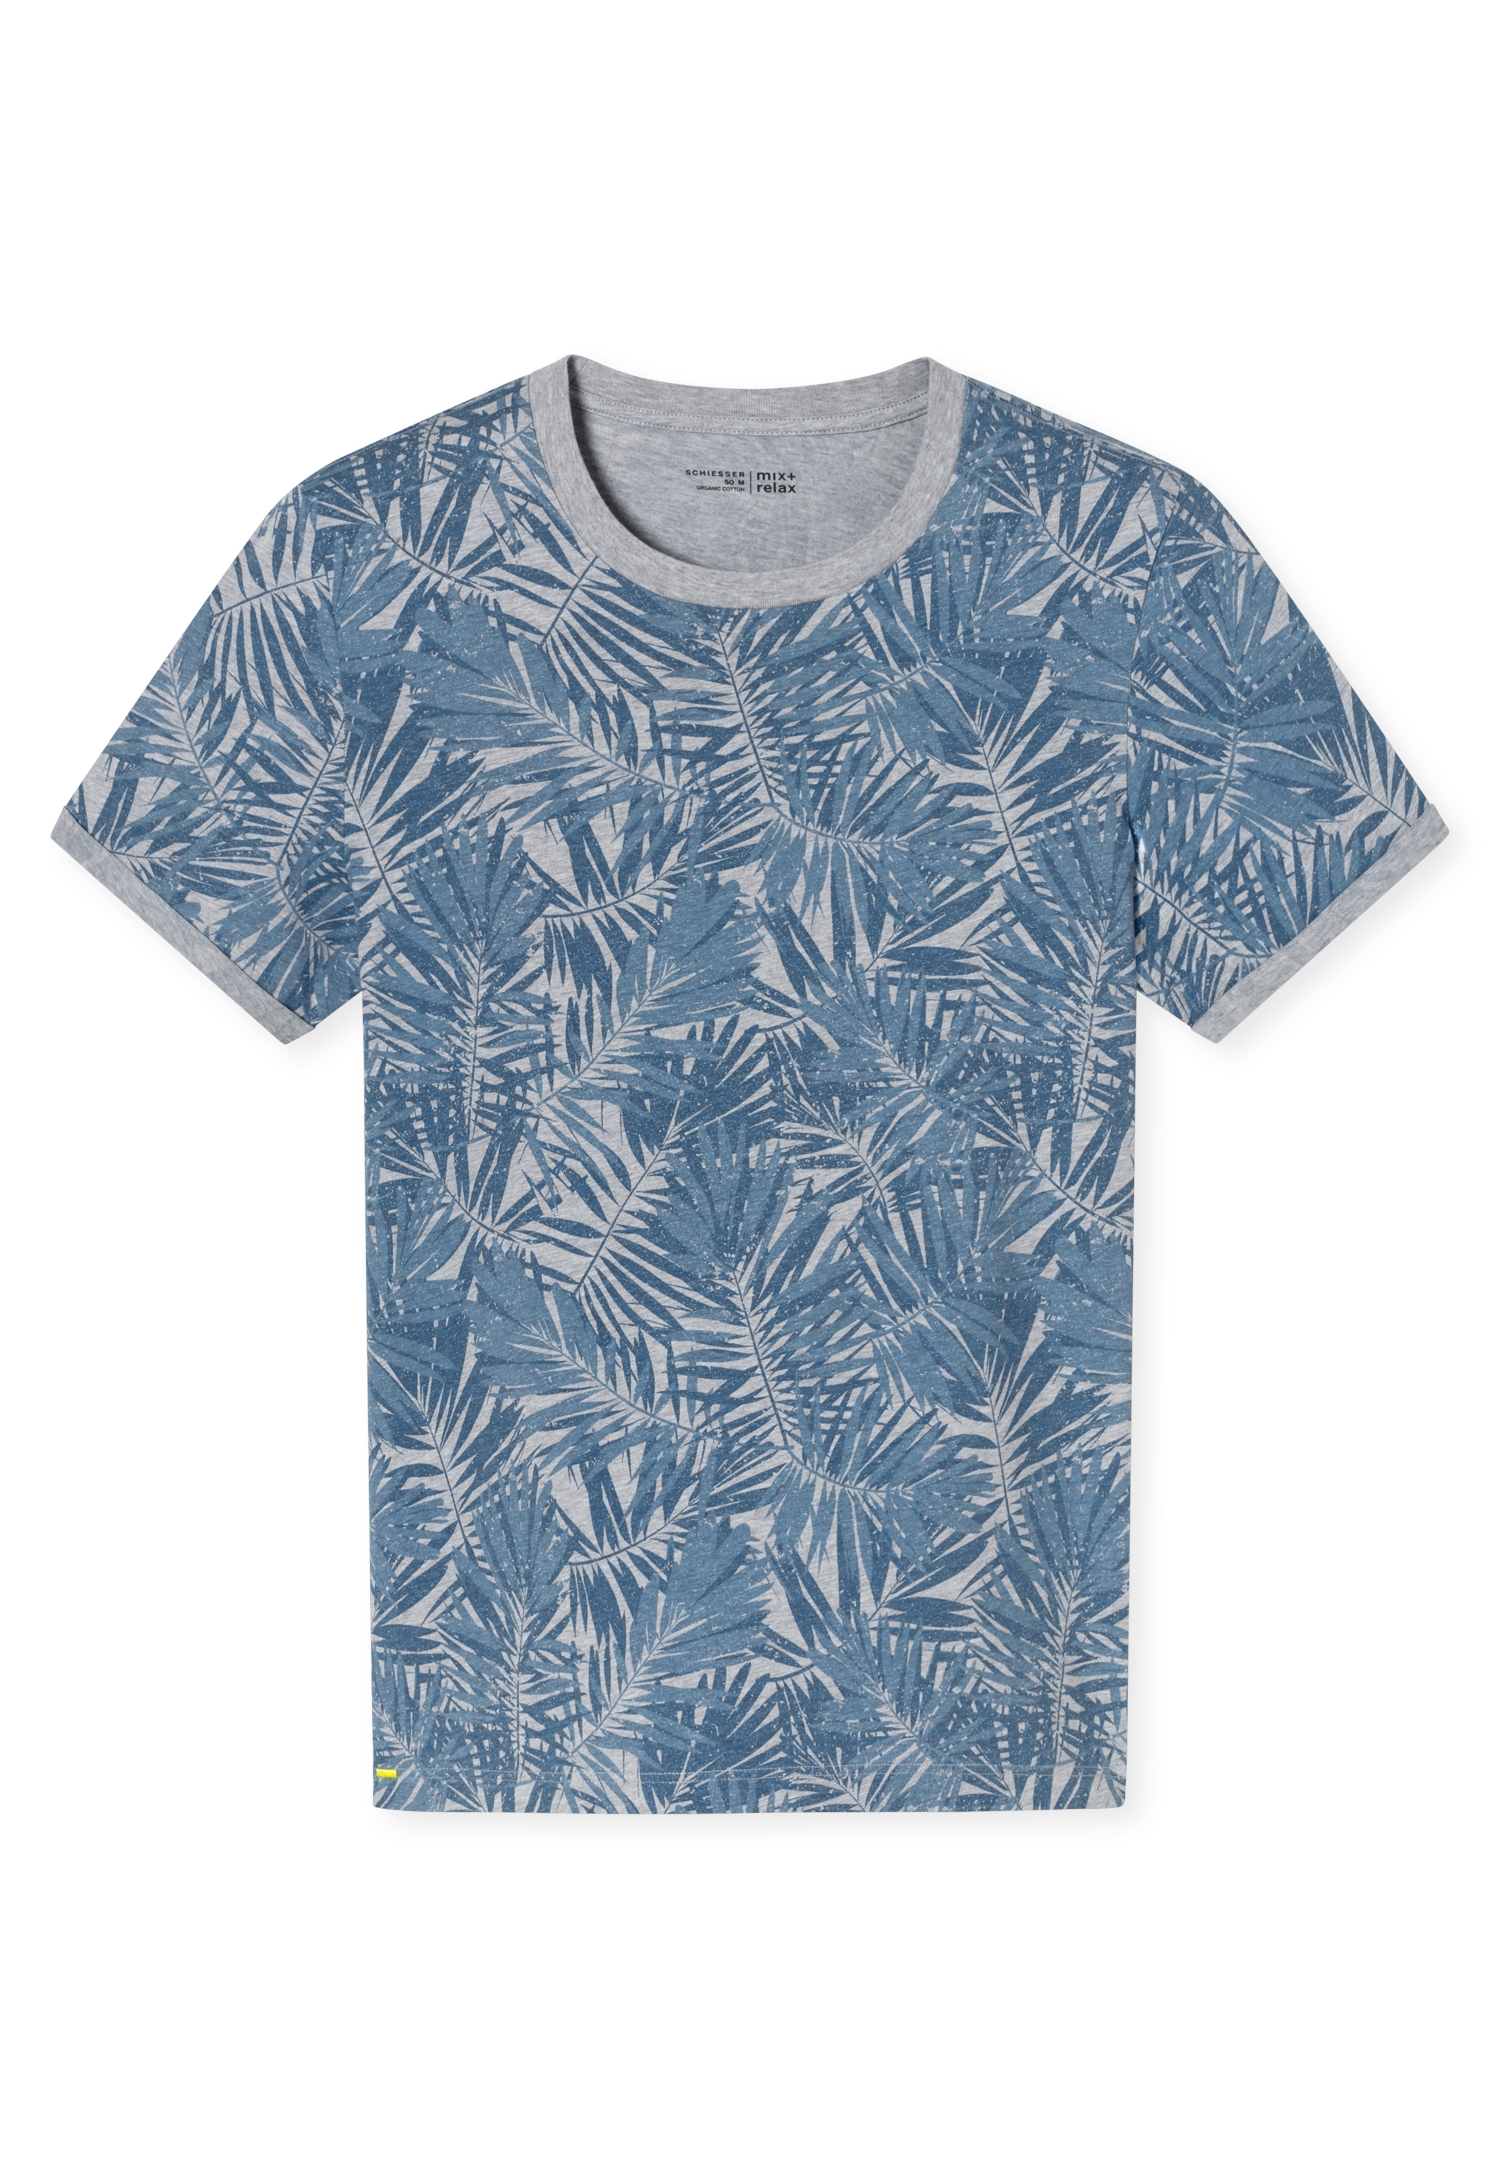 Herren-Lounge-T-Shirt "Mix&Relax" mit Blätter-Allover-Print aus 100 % Organic Cotton-Single-Jersey